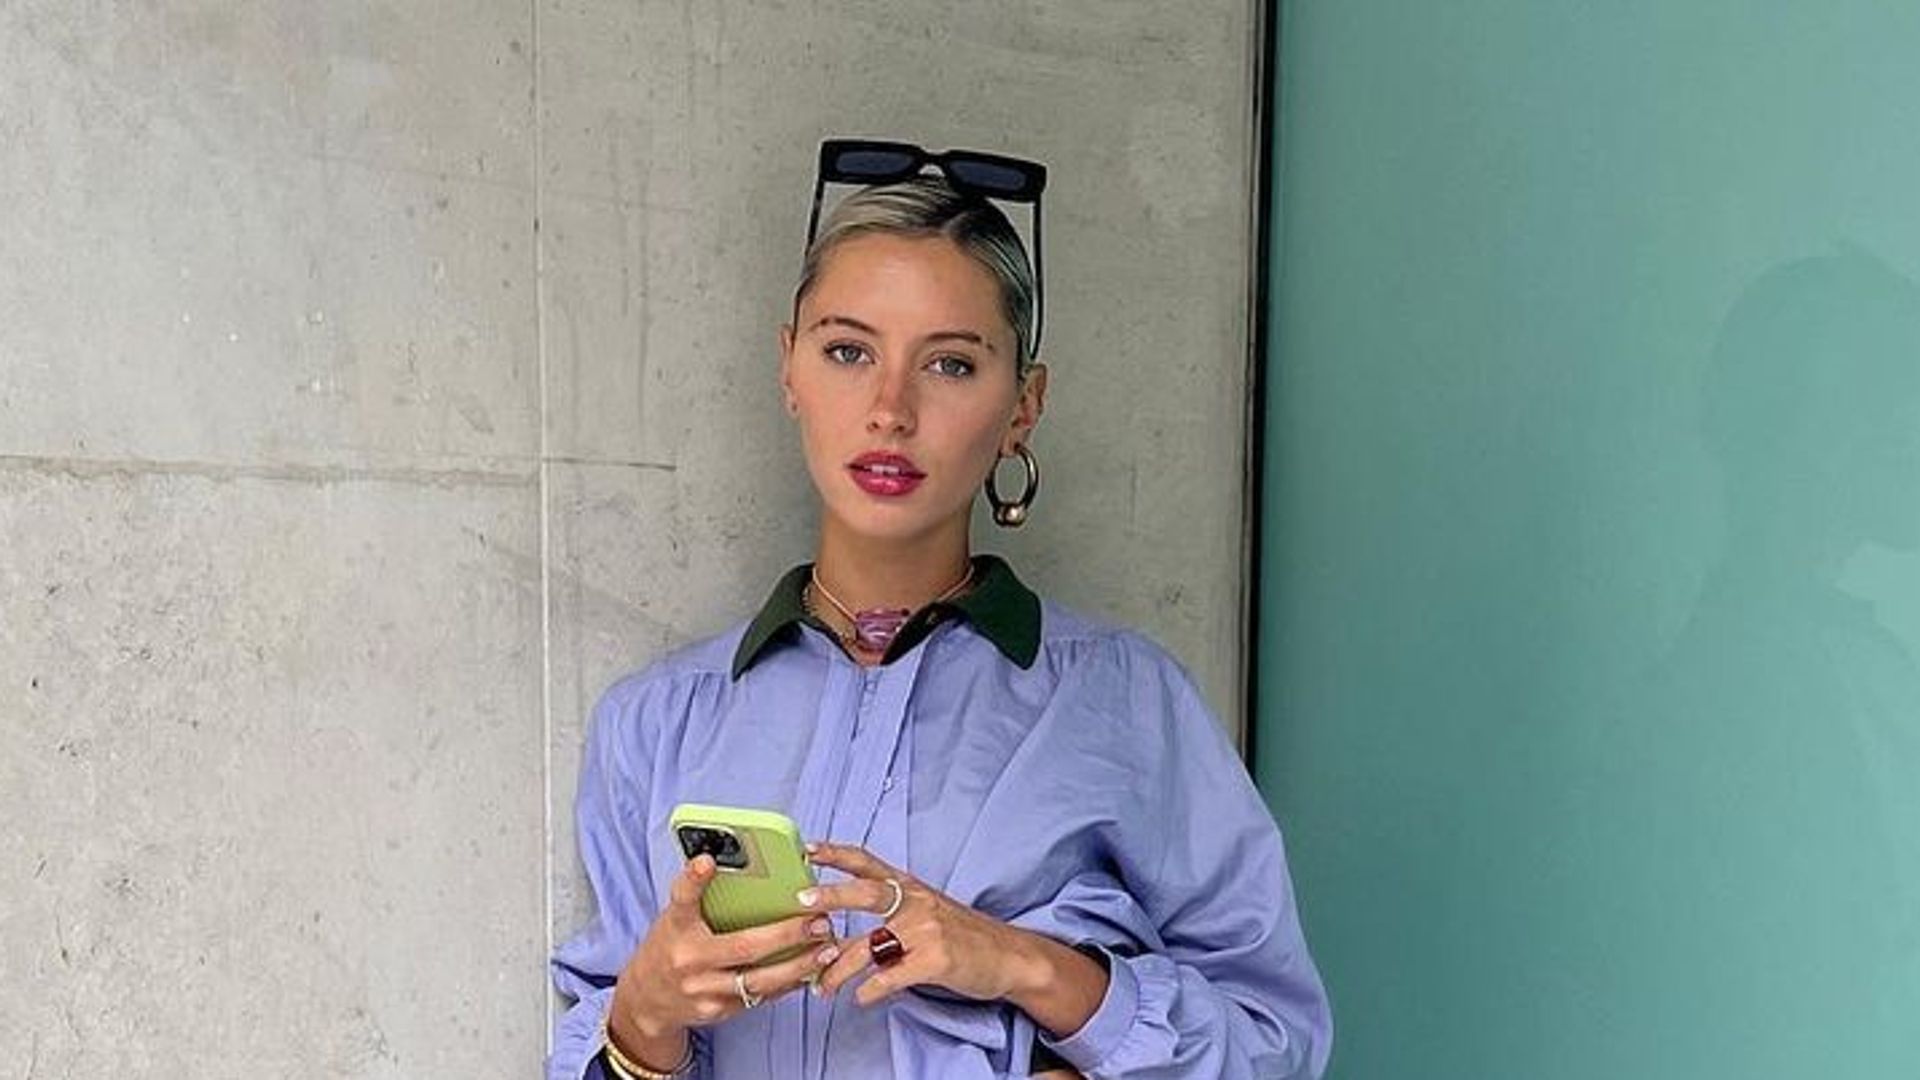 Iris Law shows off her blue shirt and tartan skirt on Instagram 